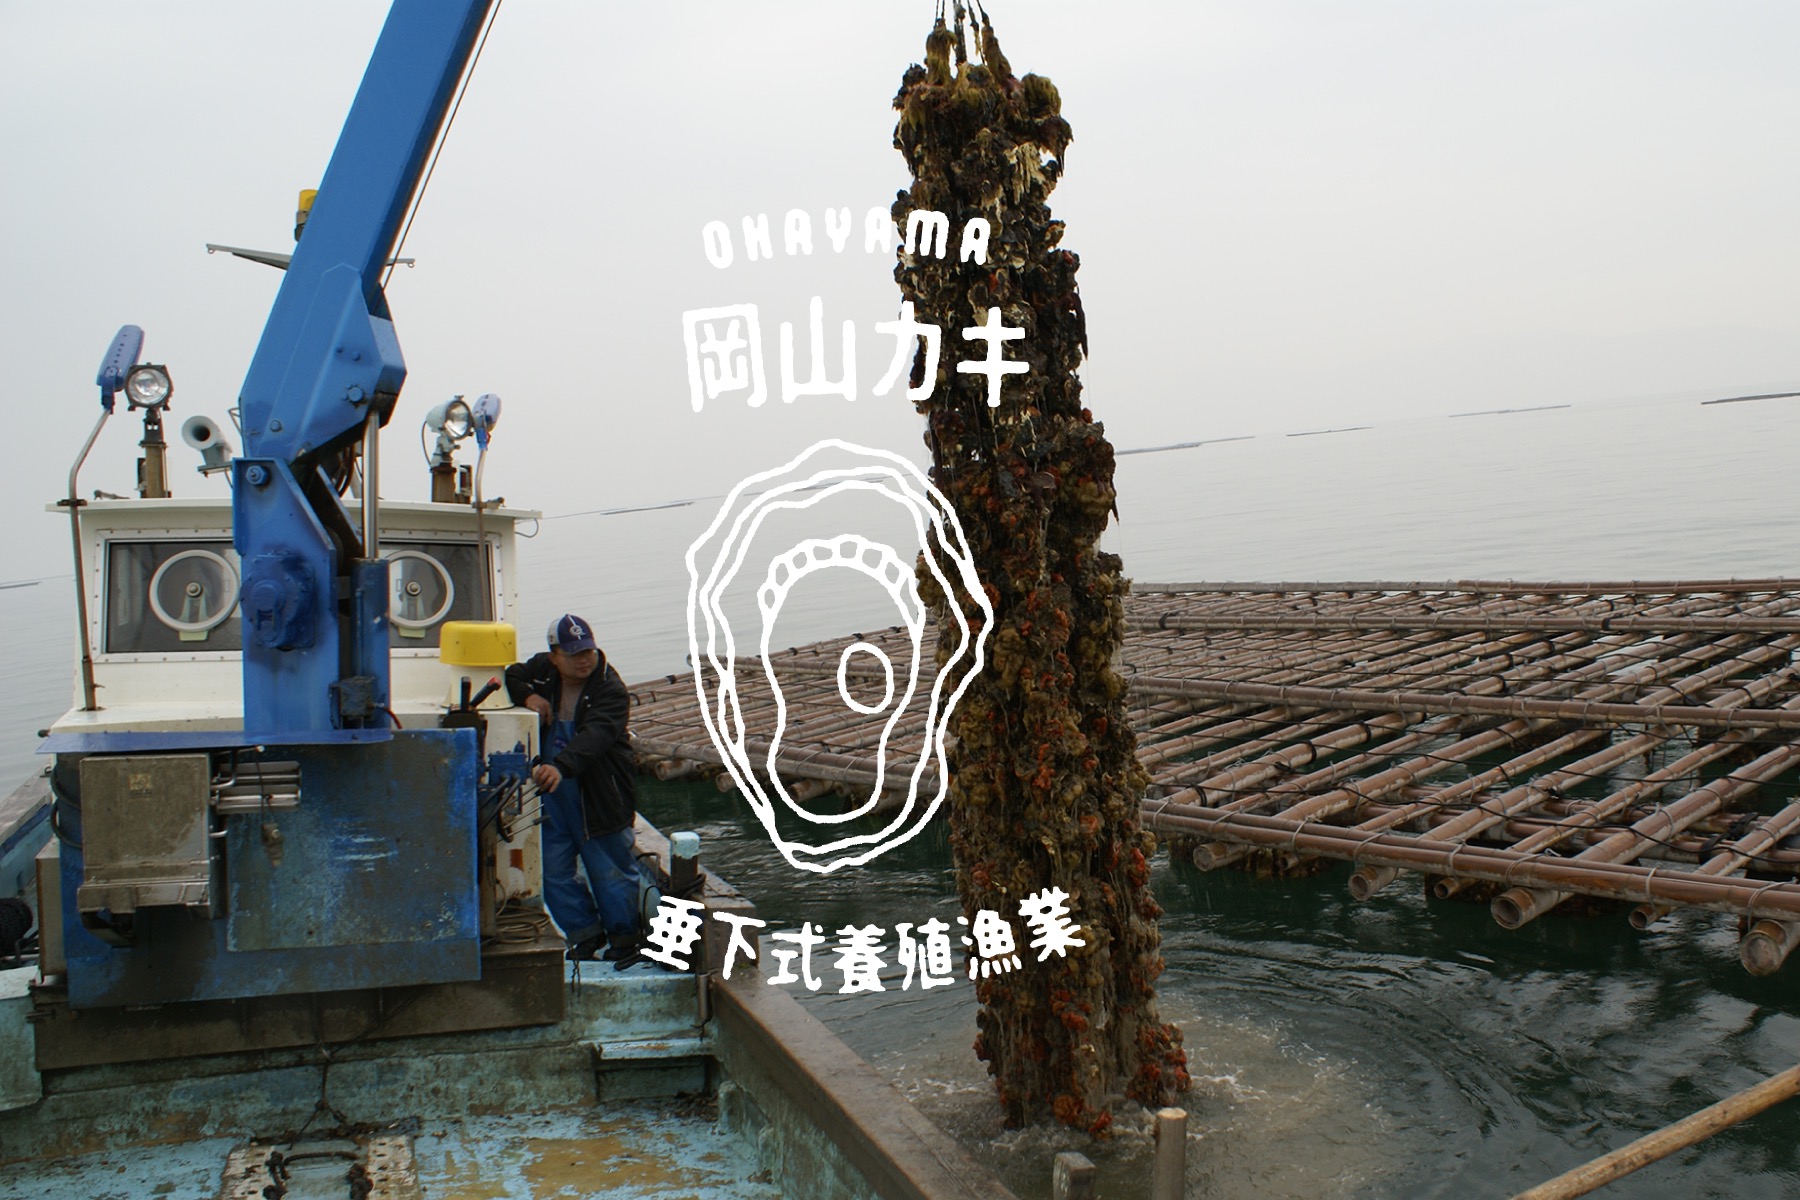 OKAYAMA SETOUCHI OKUCHO<br> ROPE GROWN OYSTER FISHERY MSC CERTIFICATION